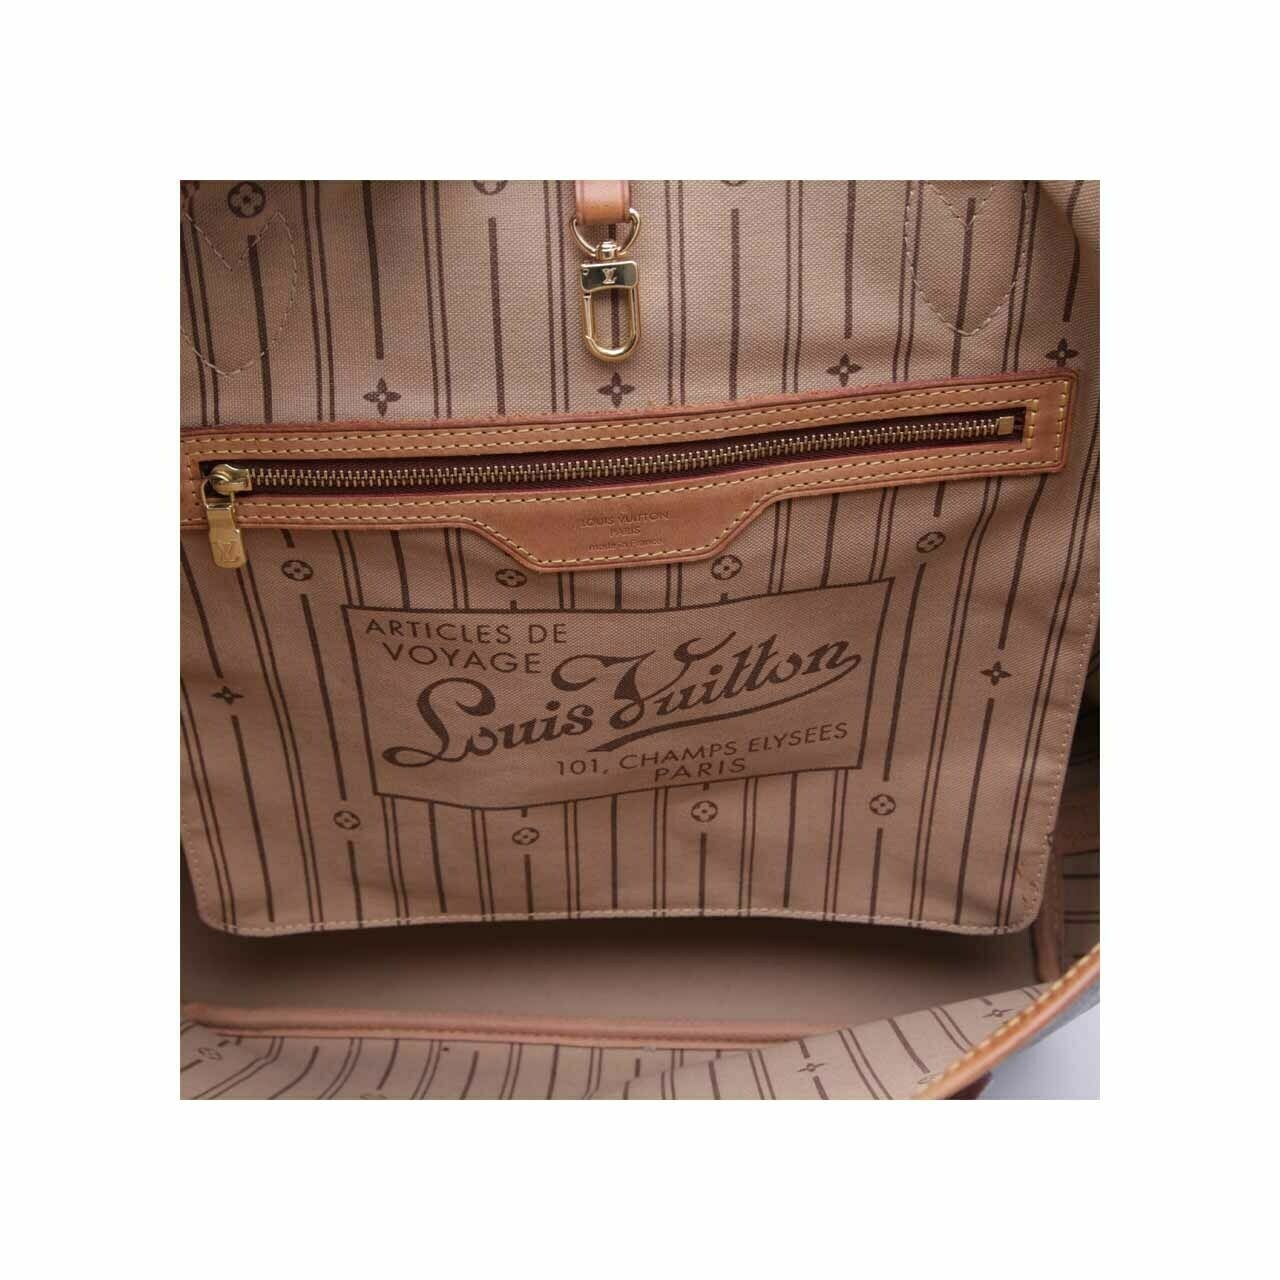 Louis Vuitton Brown Monogram Tote Bag